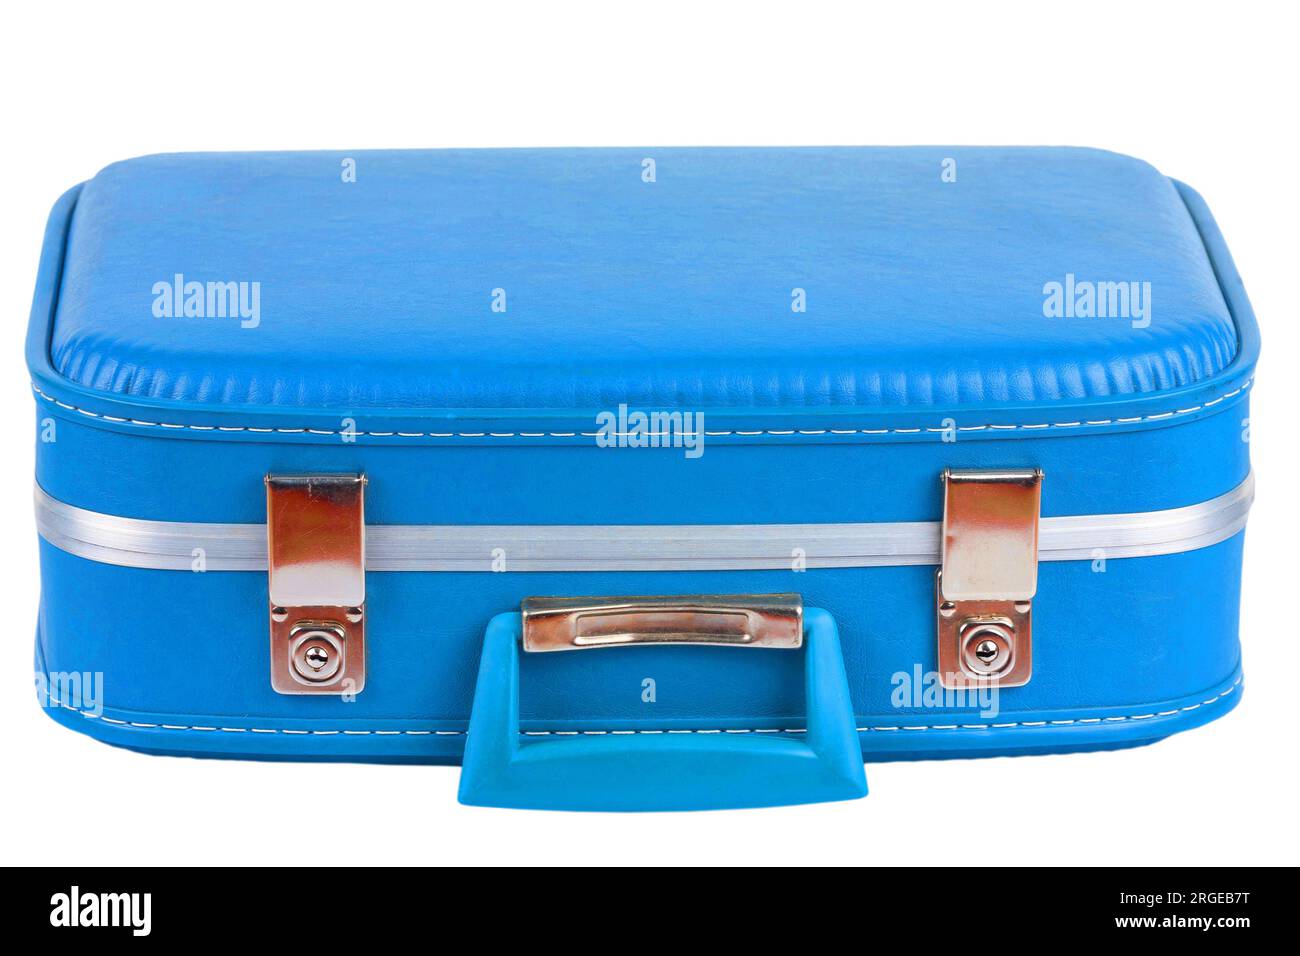 https://c8.alamy.com/comp/2RGEB7T/vintage-blue-suitcase-isolated-on-white-background-2RGEB7T.jpg